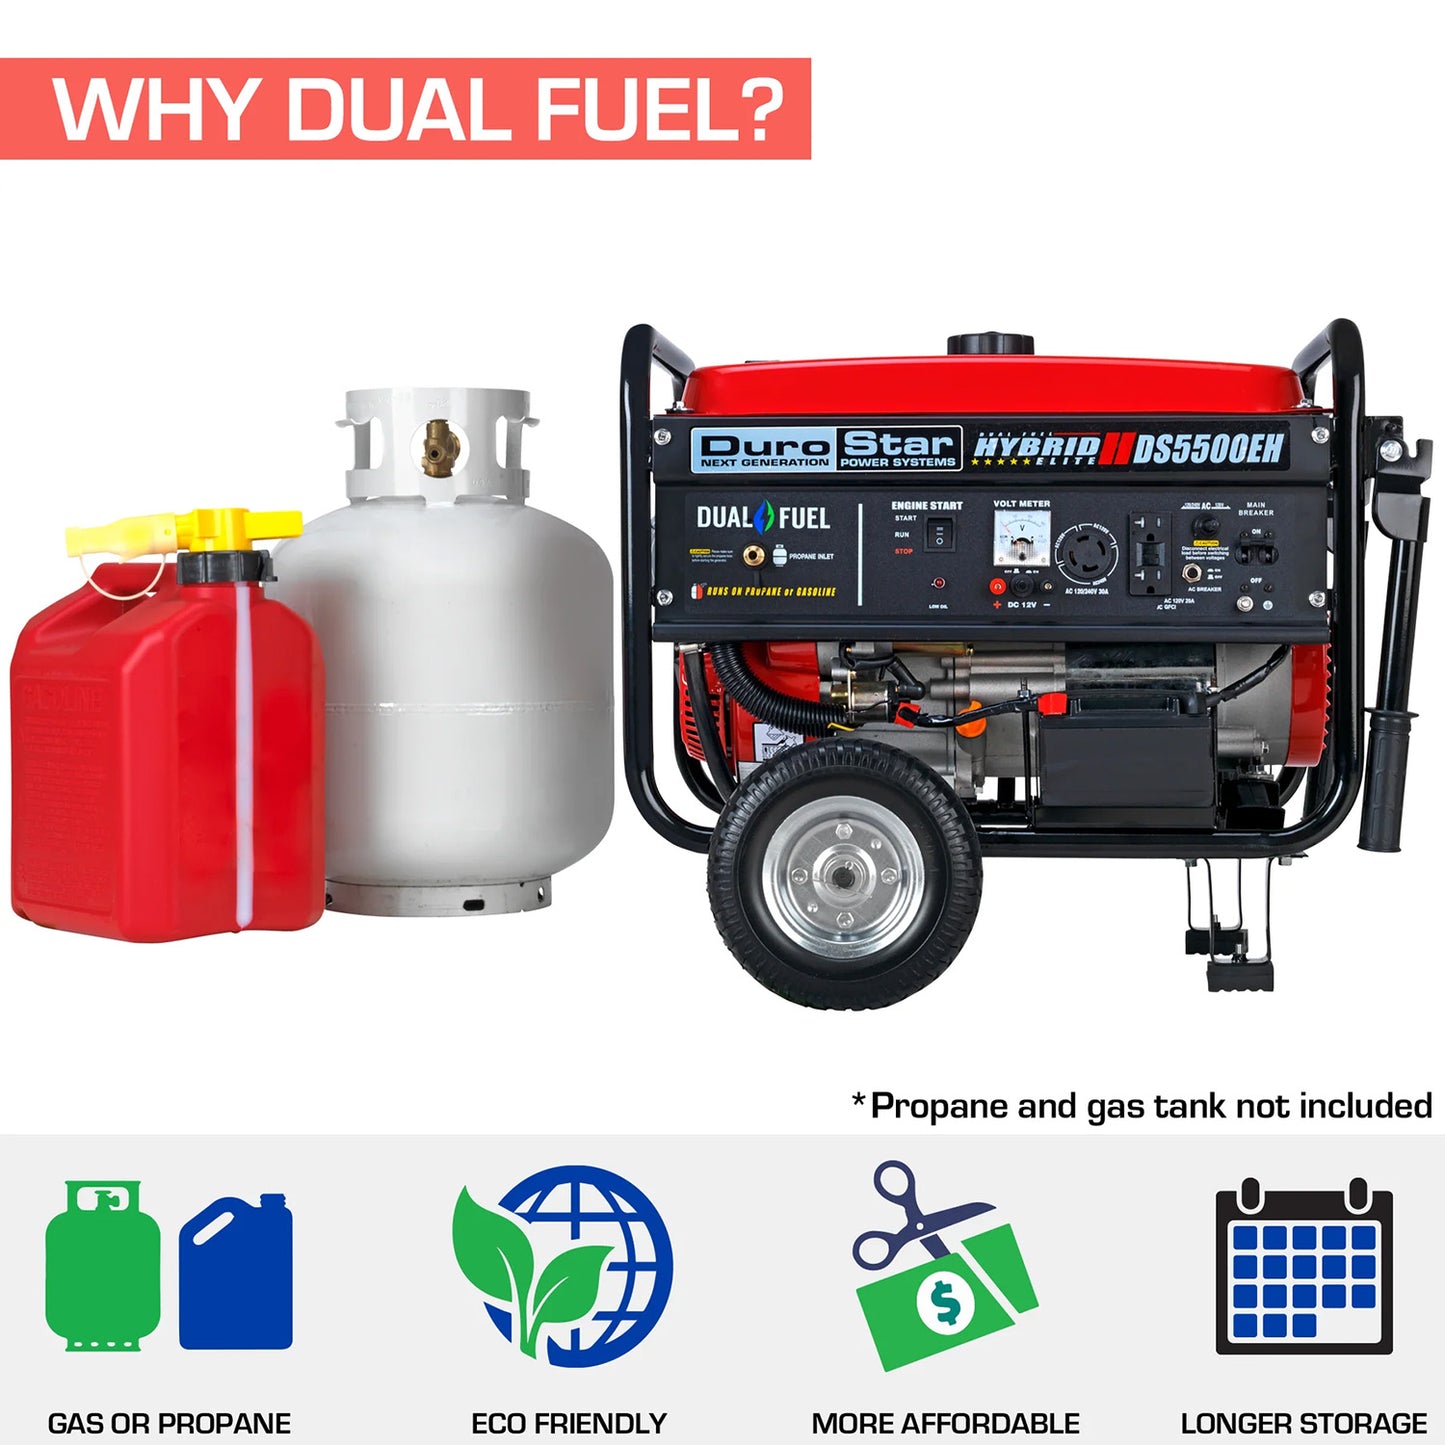 DuroStar DS5500EH Dual Fuel Portable Generator - Why Dual Fuel?